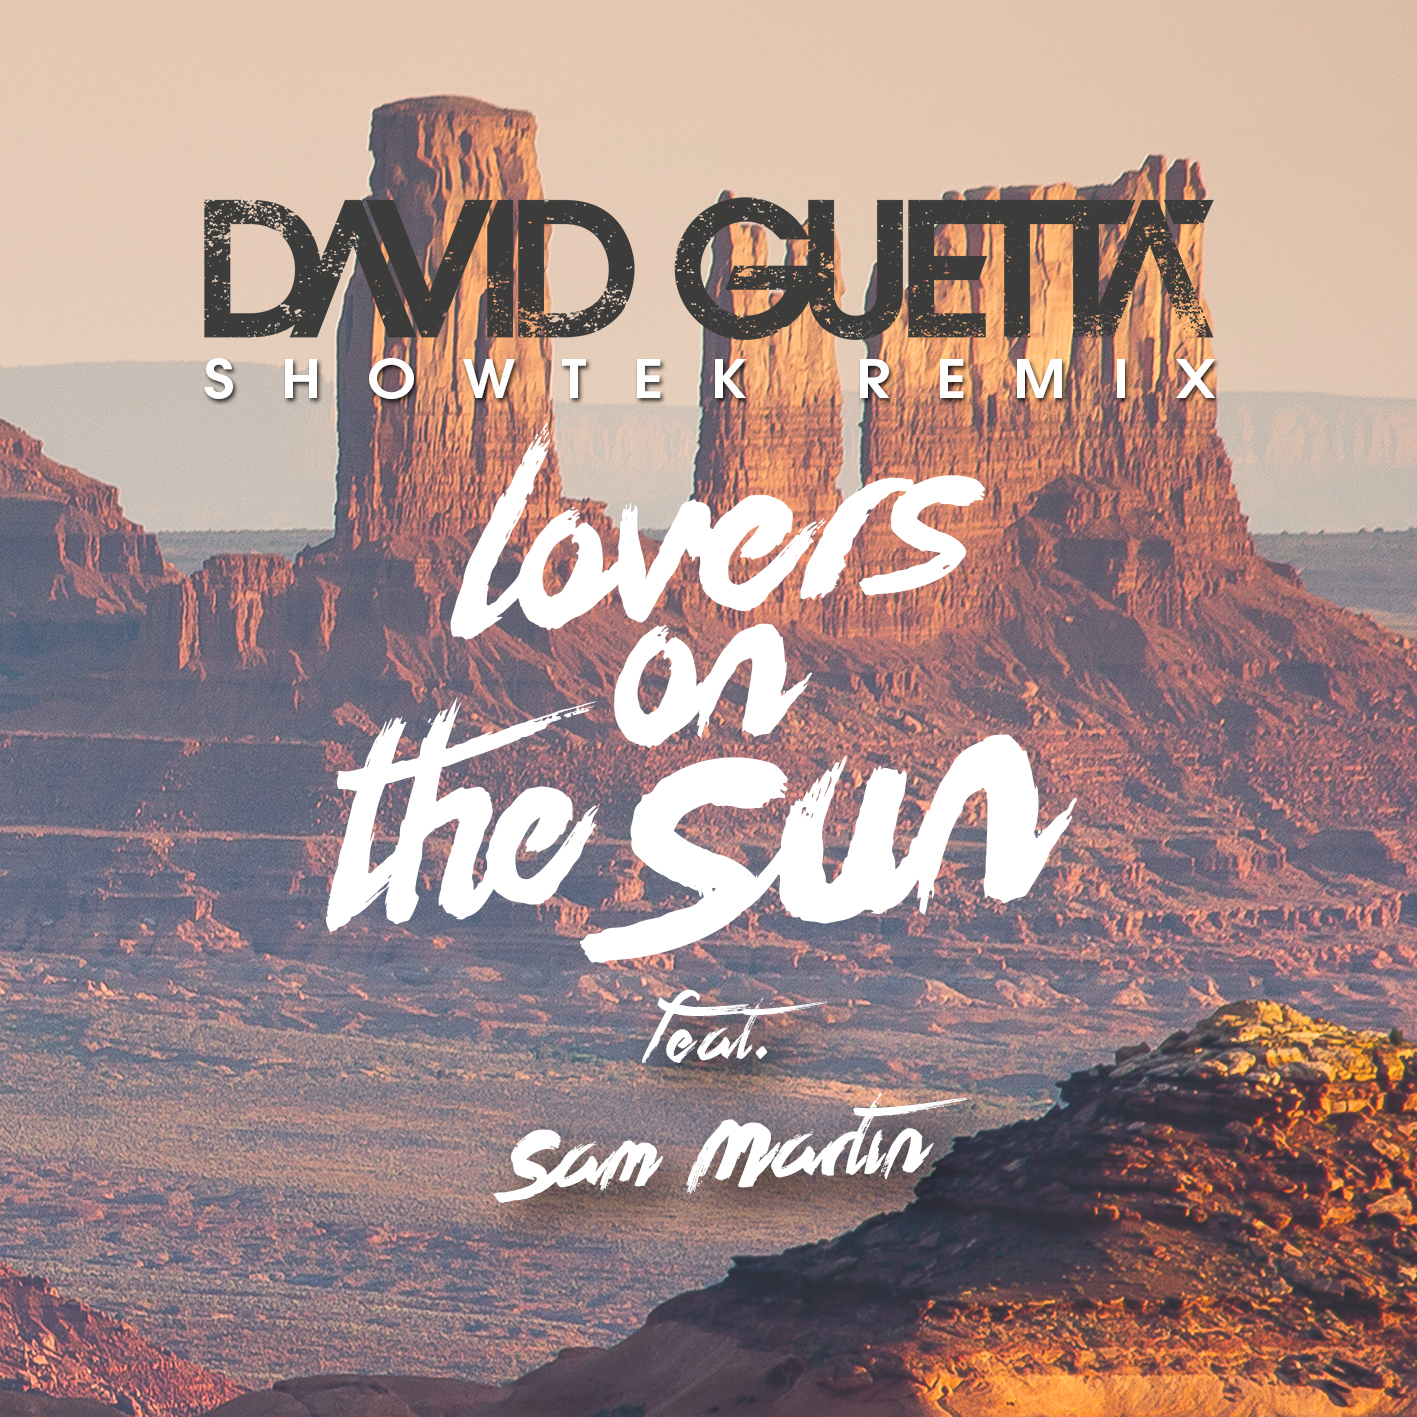 David Guetta - Lovers On The Sun ft. Sam Martin (Showtek Remix)